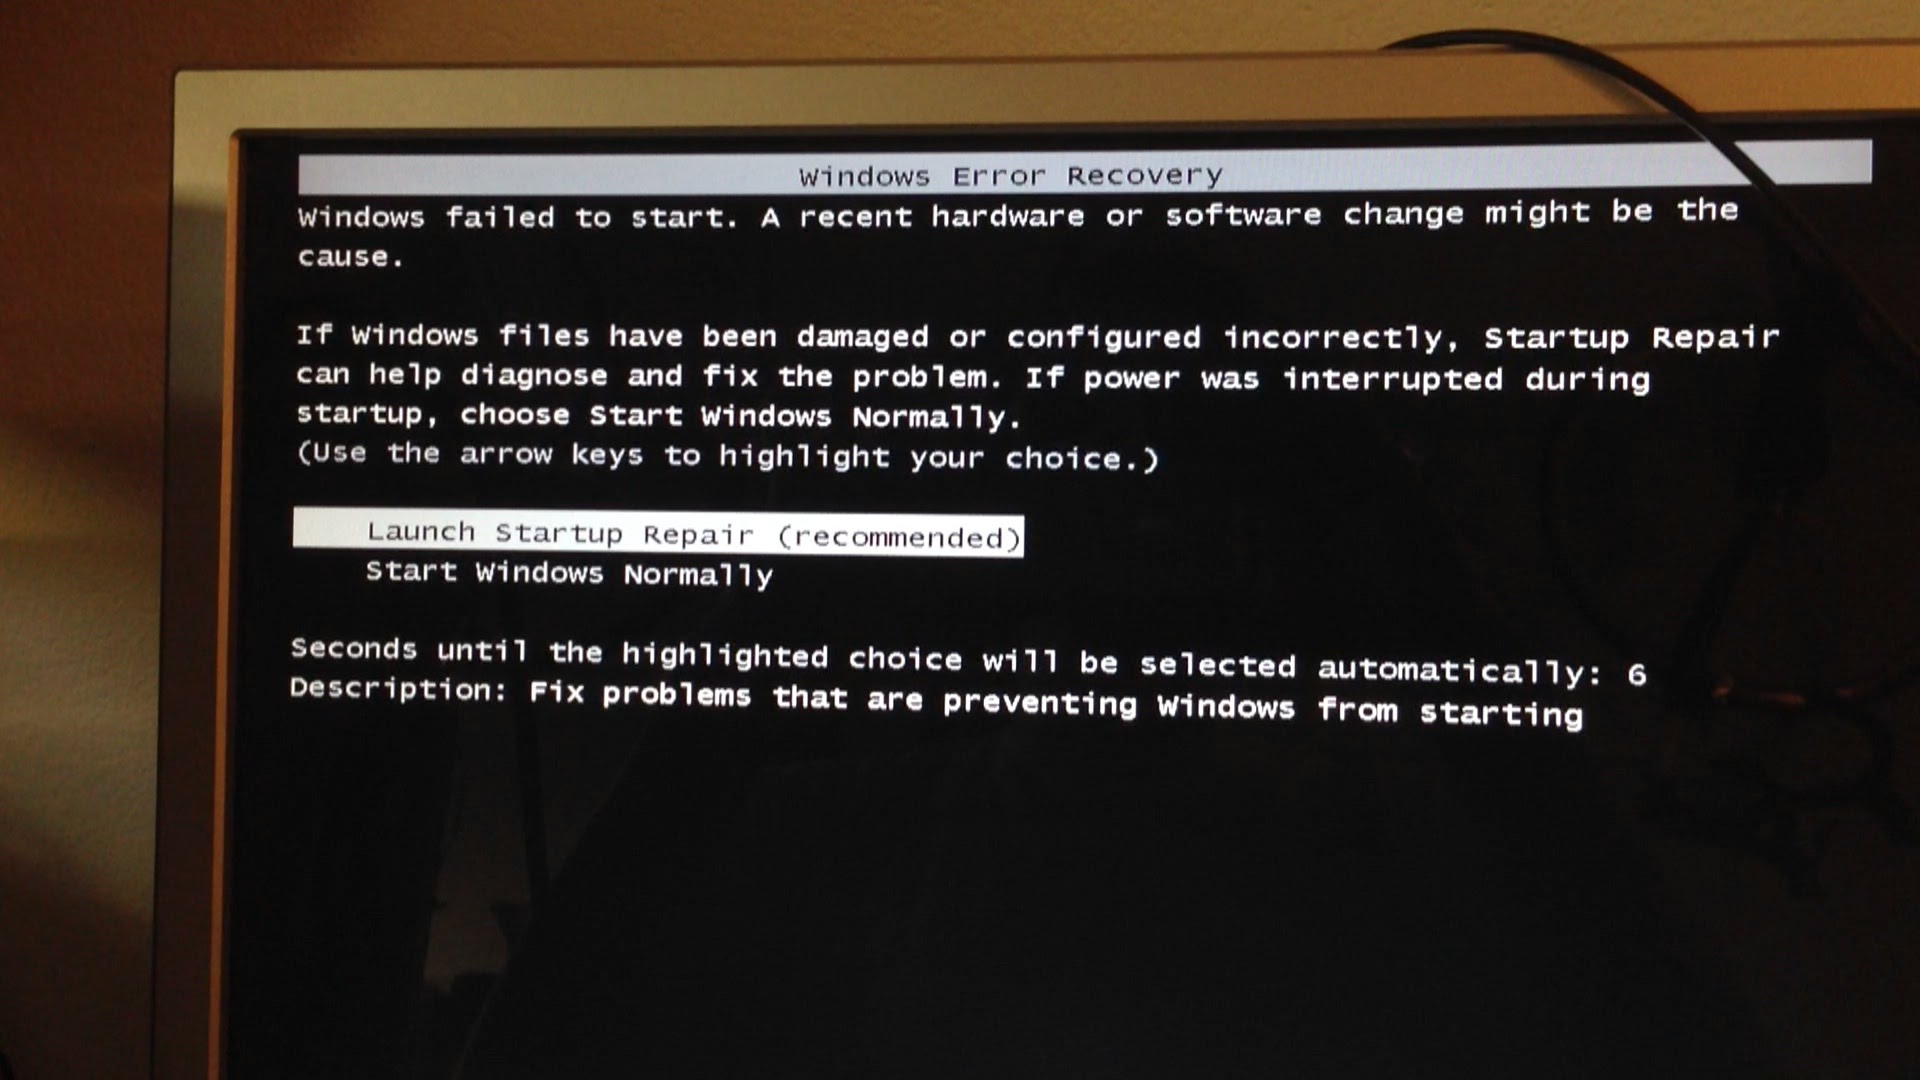 Failed to start driver error code 2148204812. Восстановление ошибок Windows. Error виндовс. Windows Error Recovery. Ошибка виндовс.